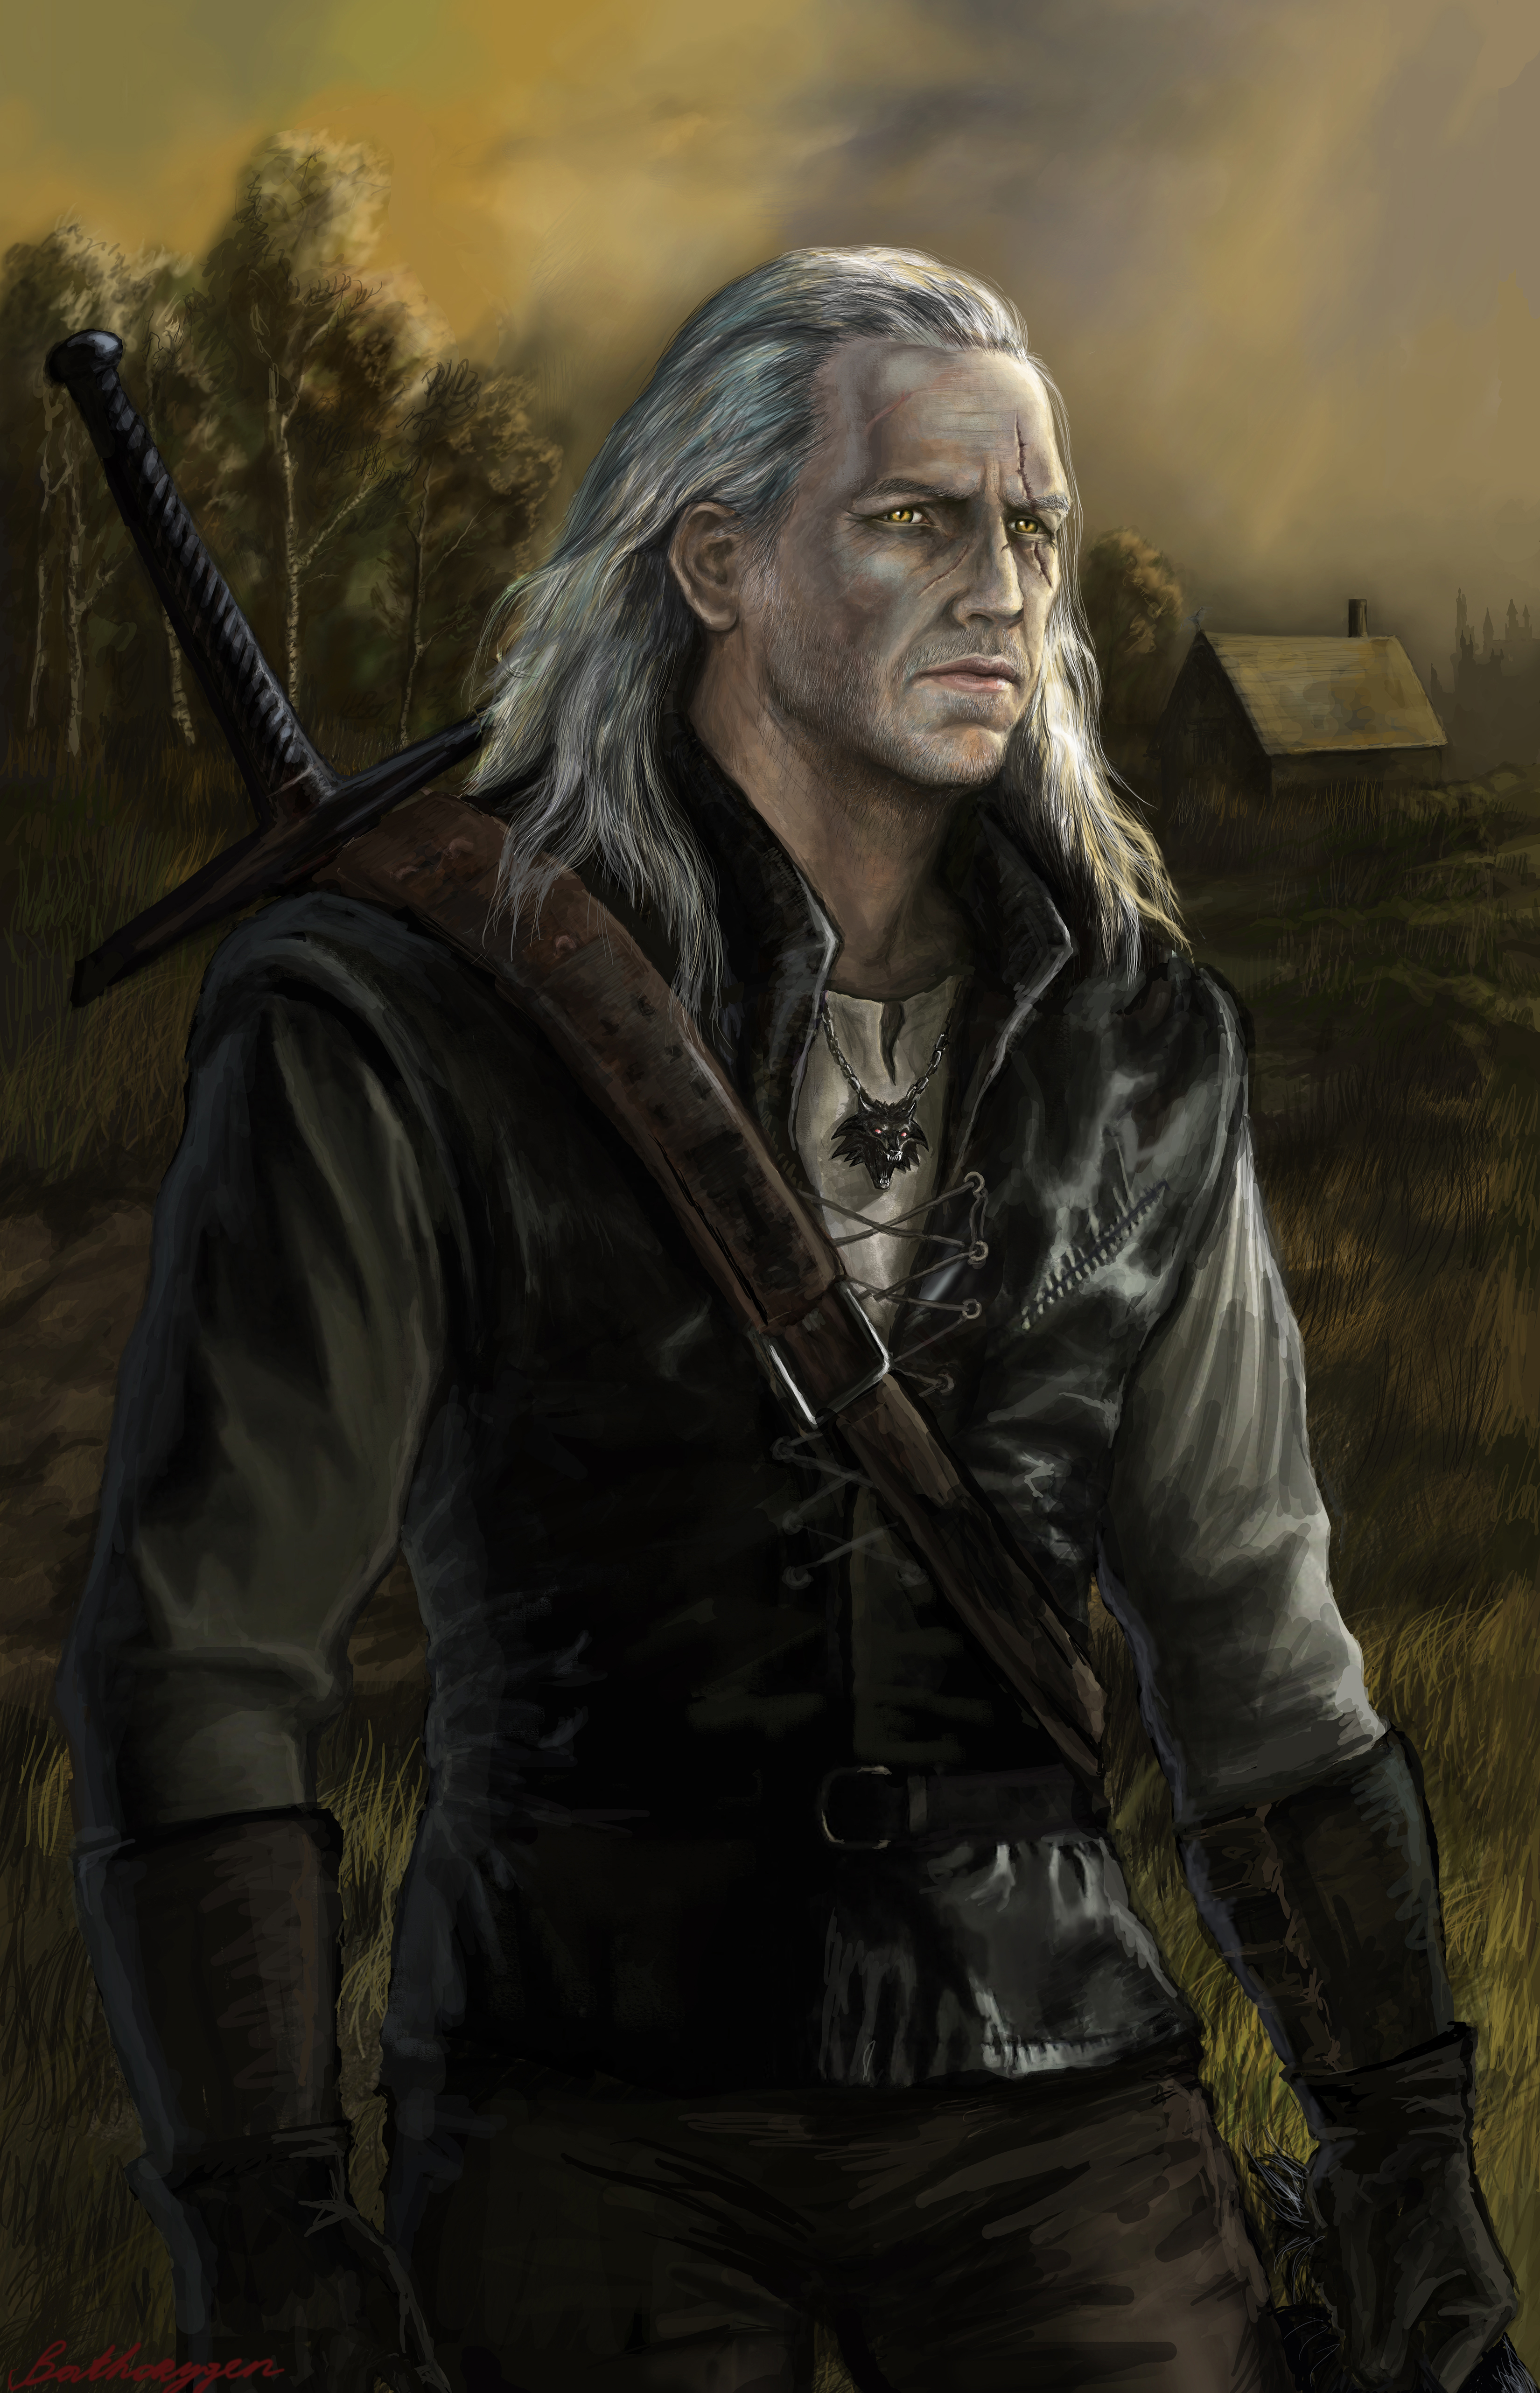 Geralt of Rivia by Bathorygen on DeviantArt